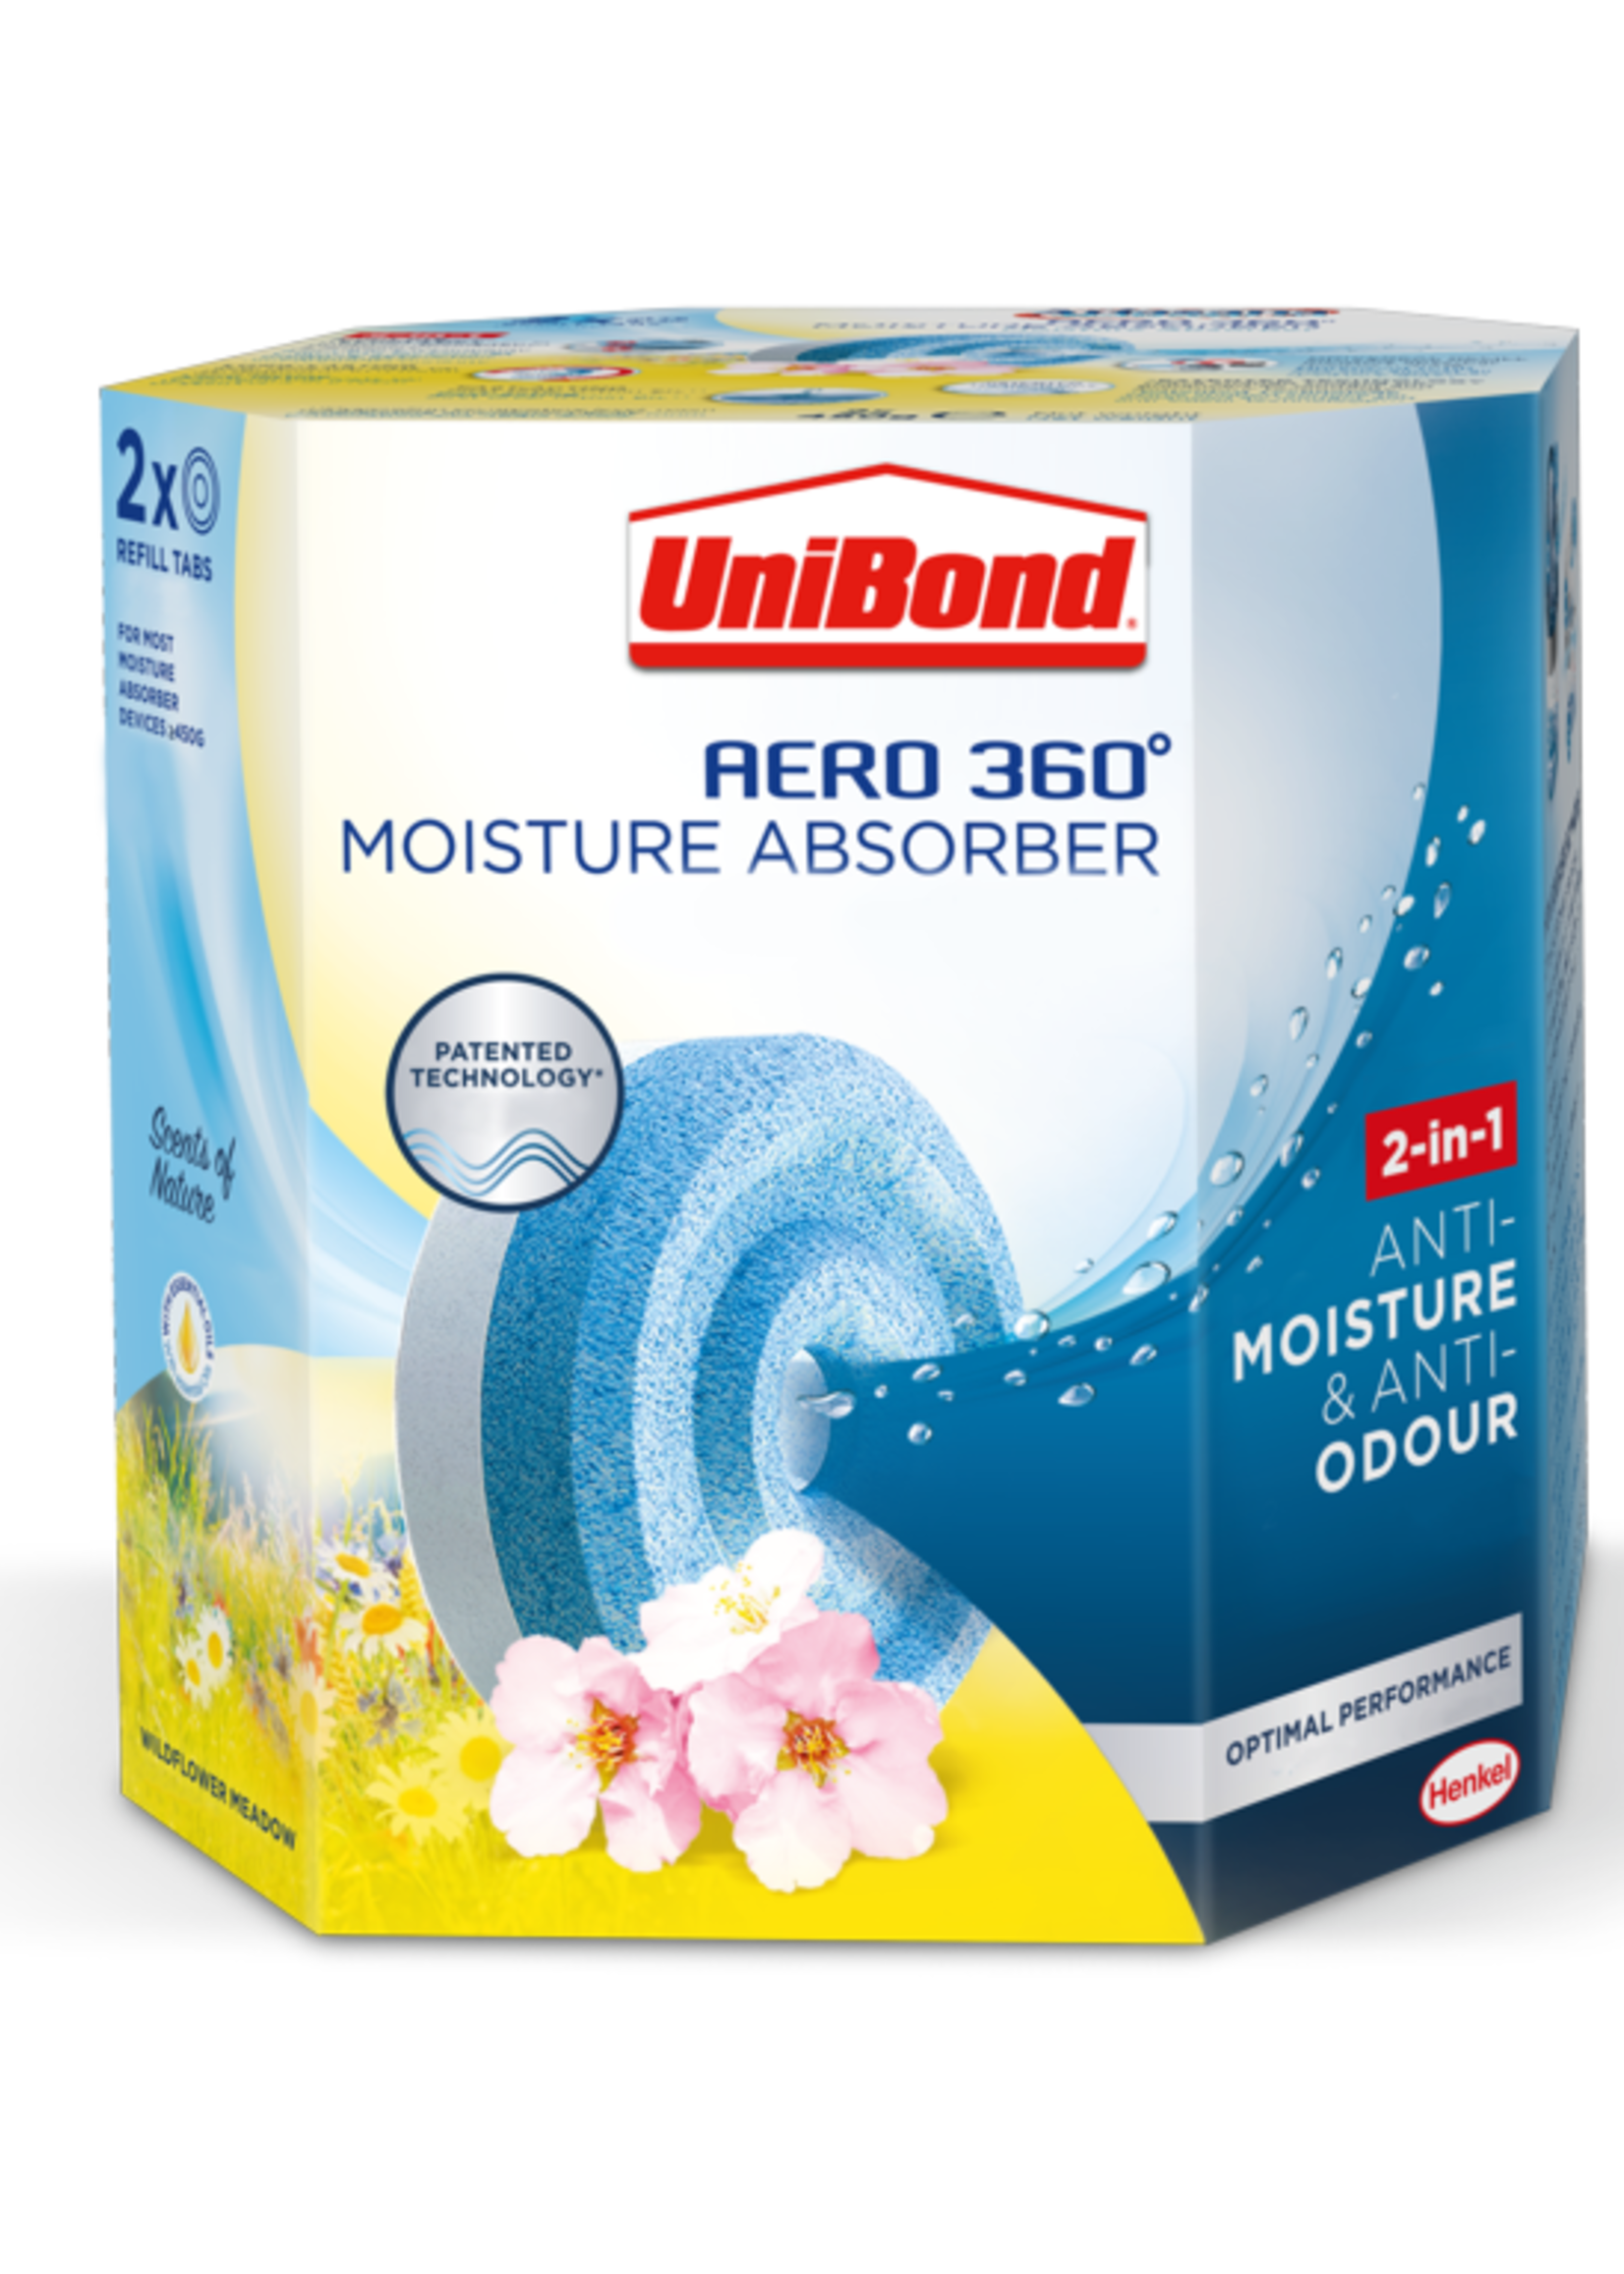 Unibond (henkel) UniBond Aero 360 Moisture Absorber Refills Wildflower Meadow